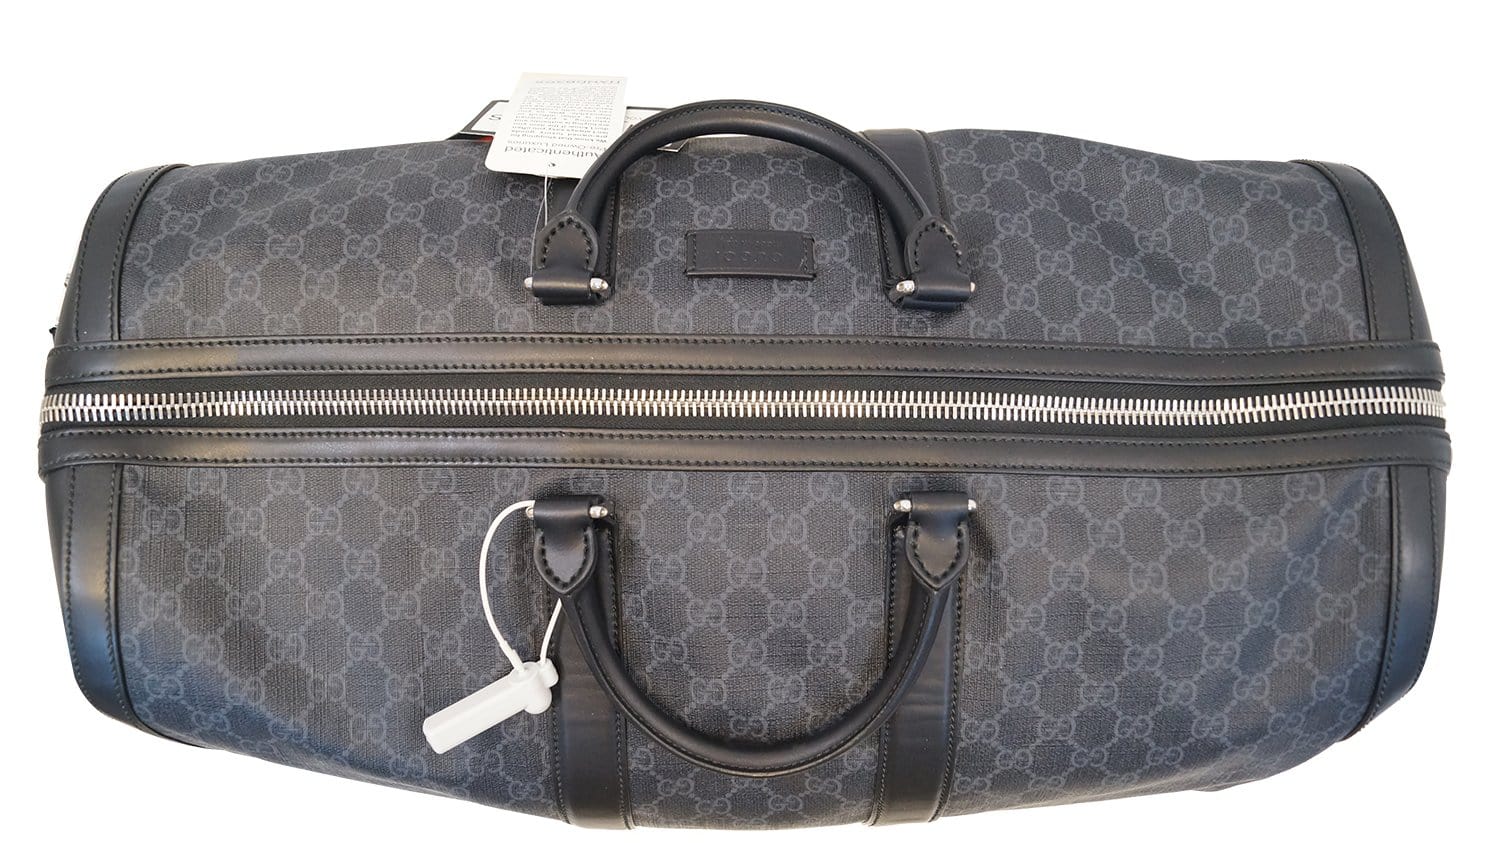 Cloth travel bag Supreme Black in Cloth - 29786524